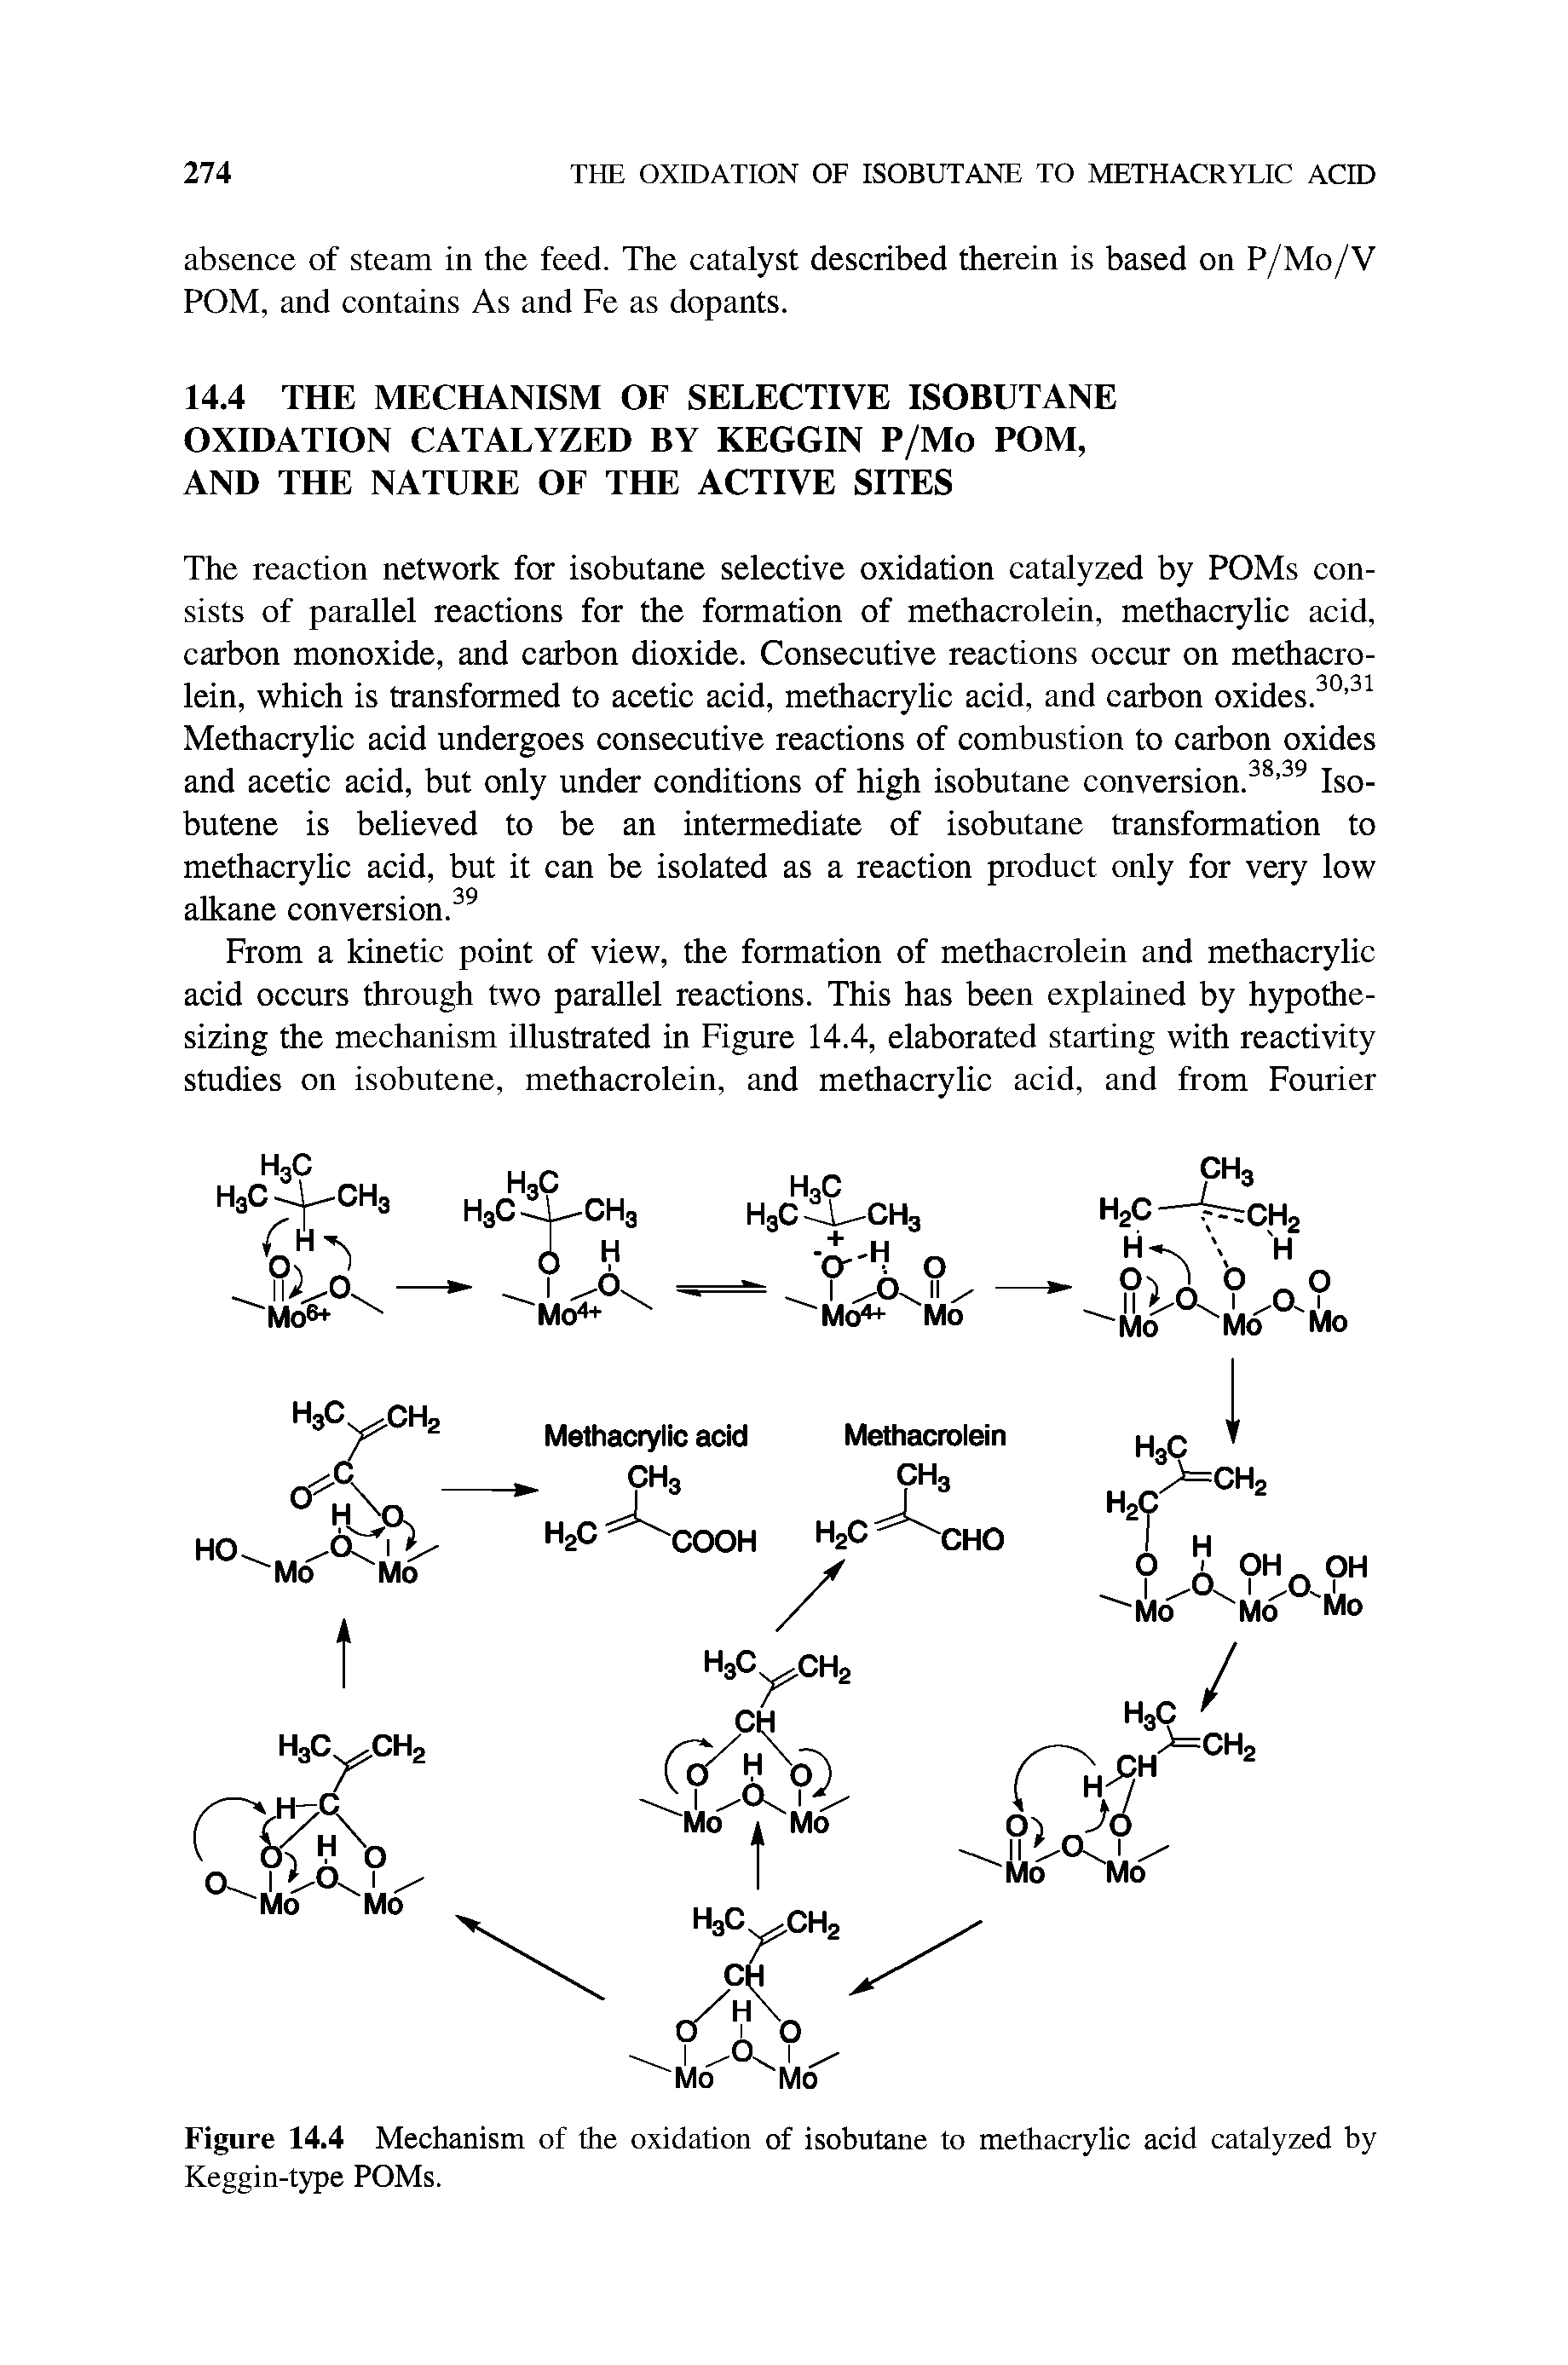 Figure 14.4 Mechanism of the oxidation of isobutane to methacrylic acid catalyzed by Keggin-type POMs.